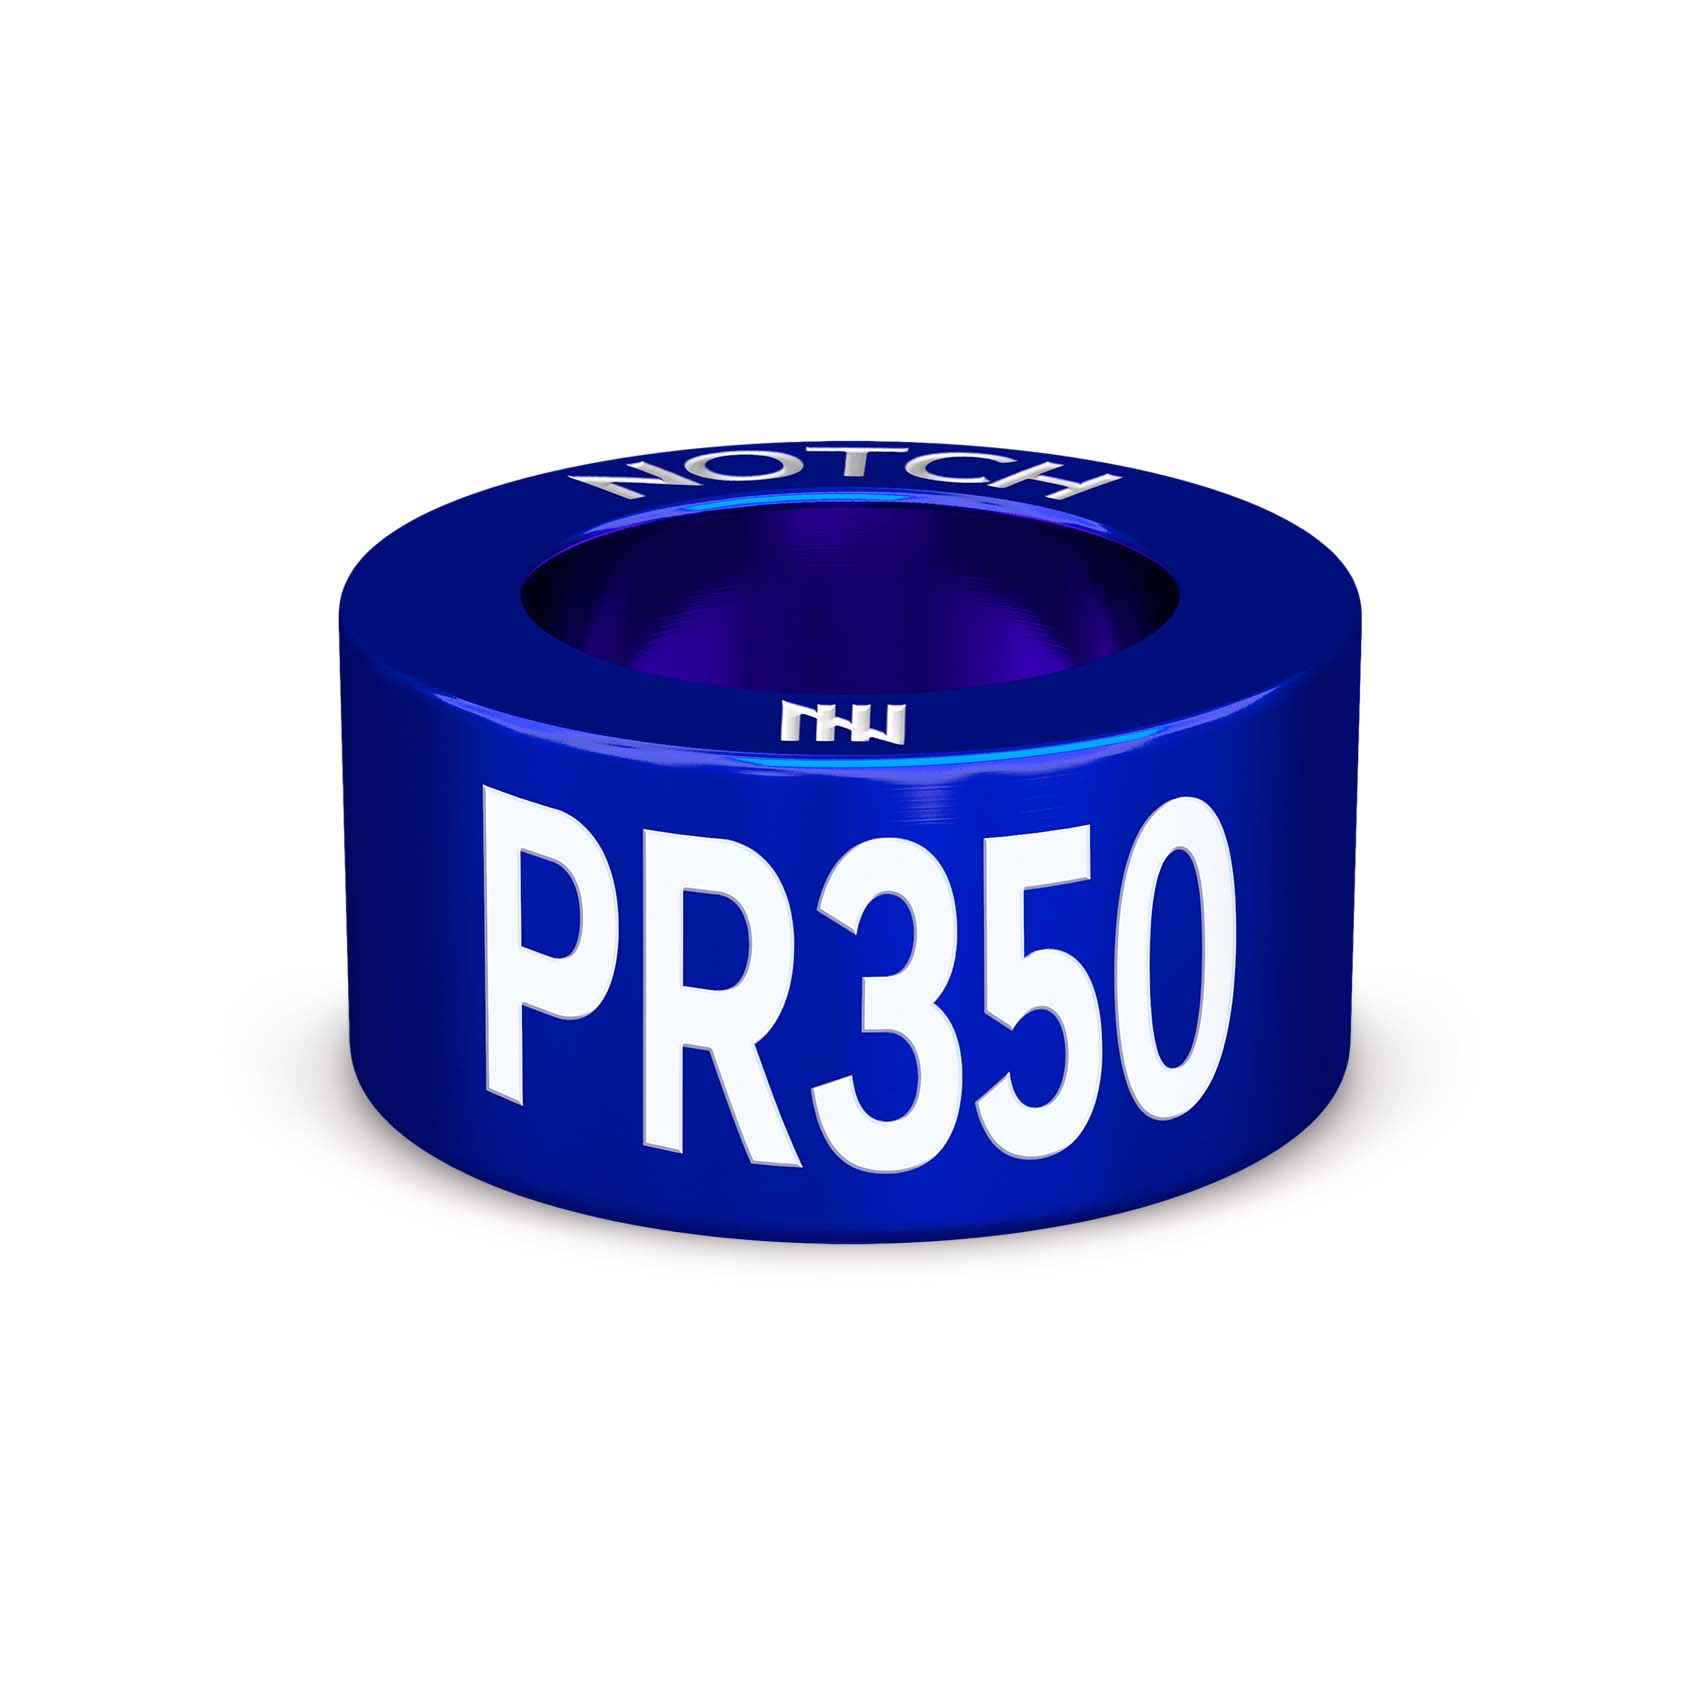 PR350 Milestone NOTCH Charm